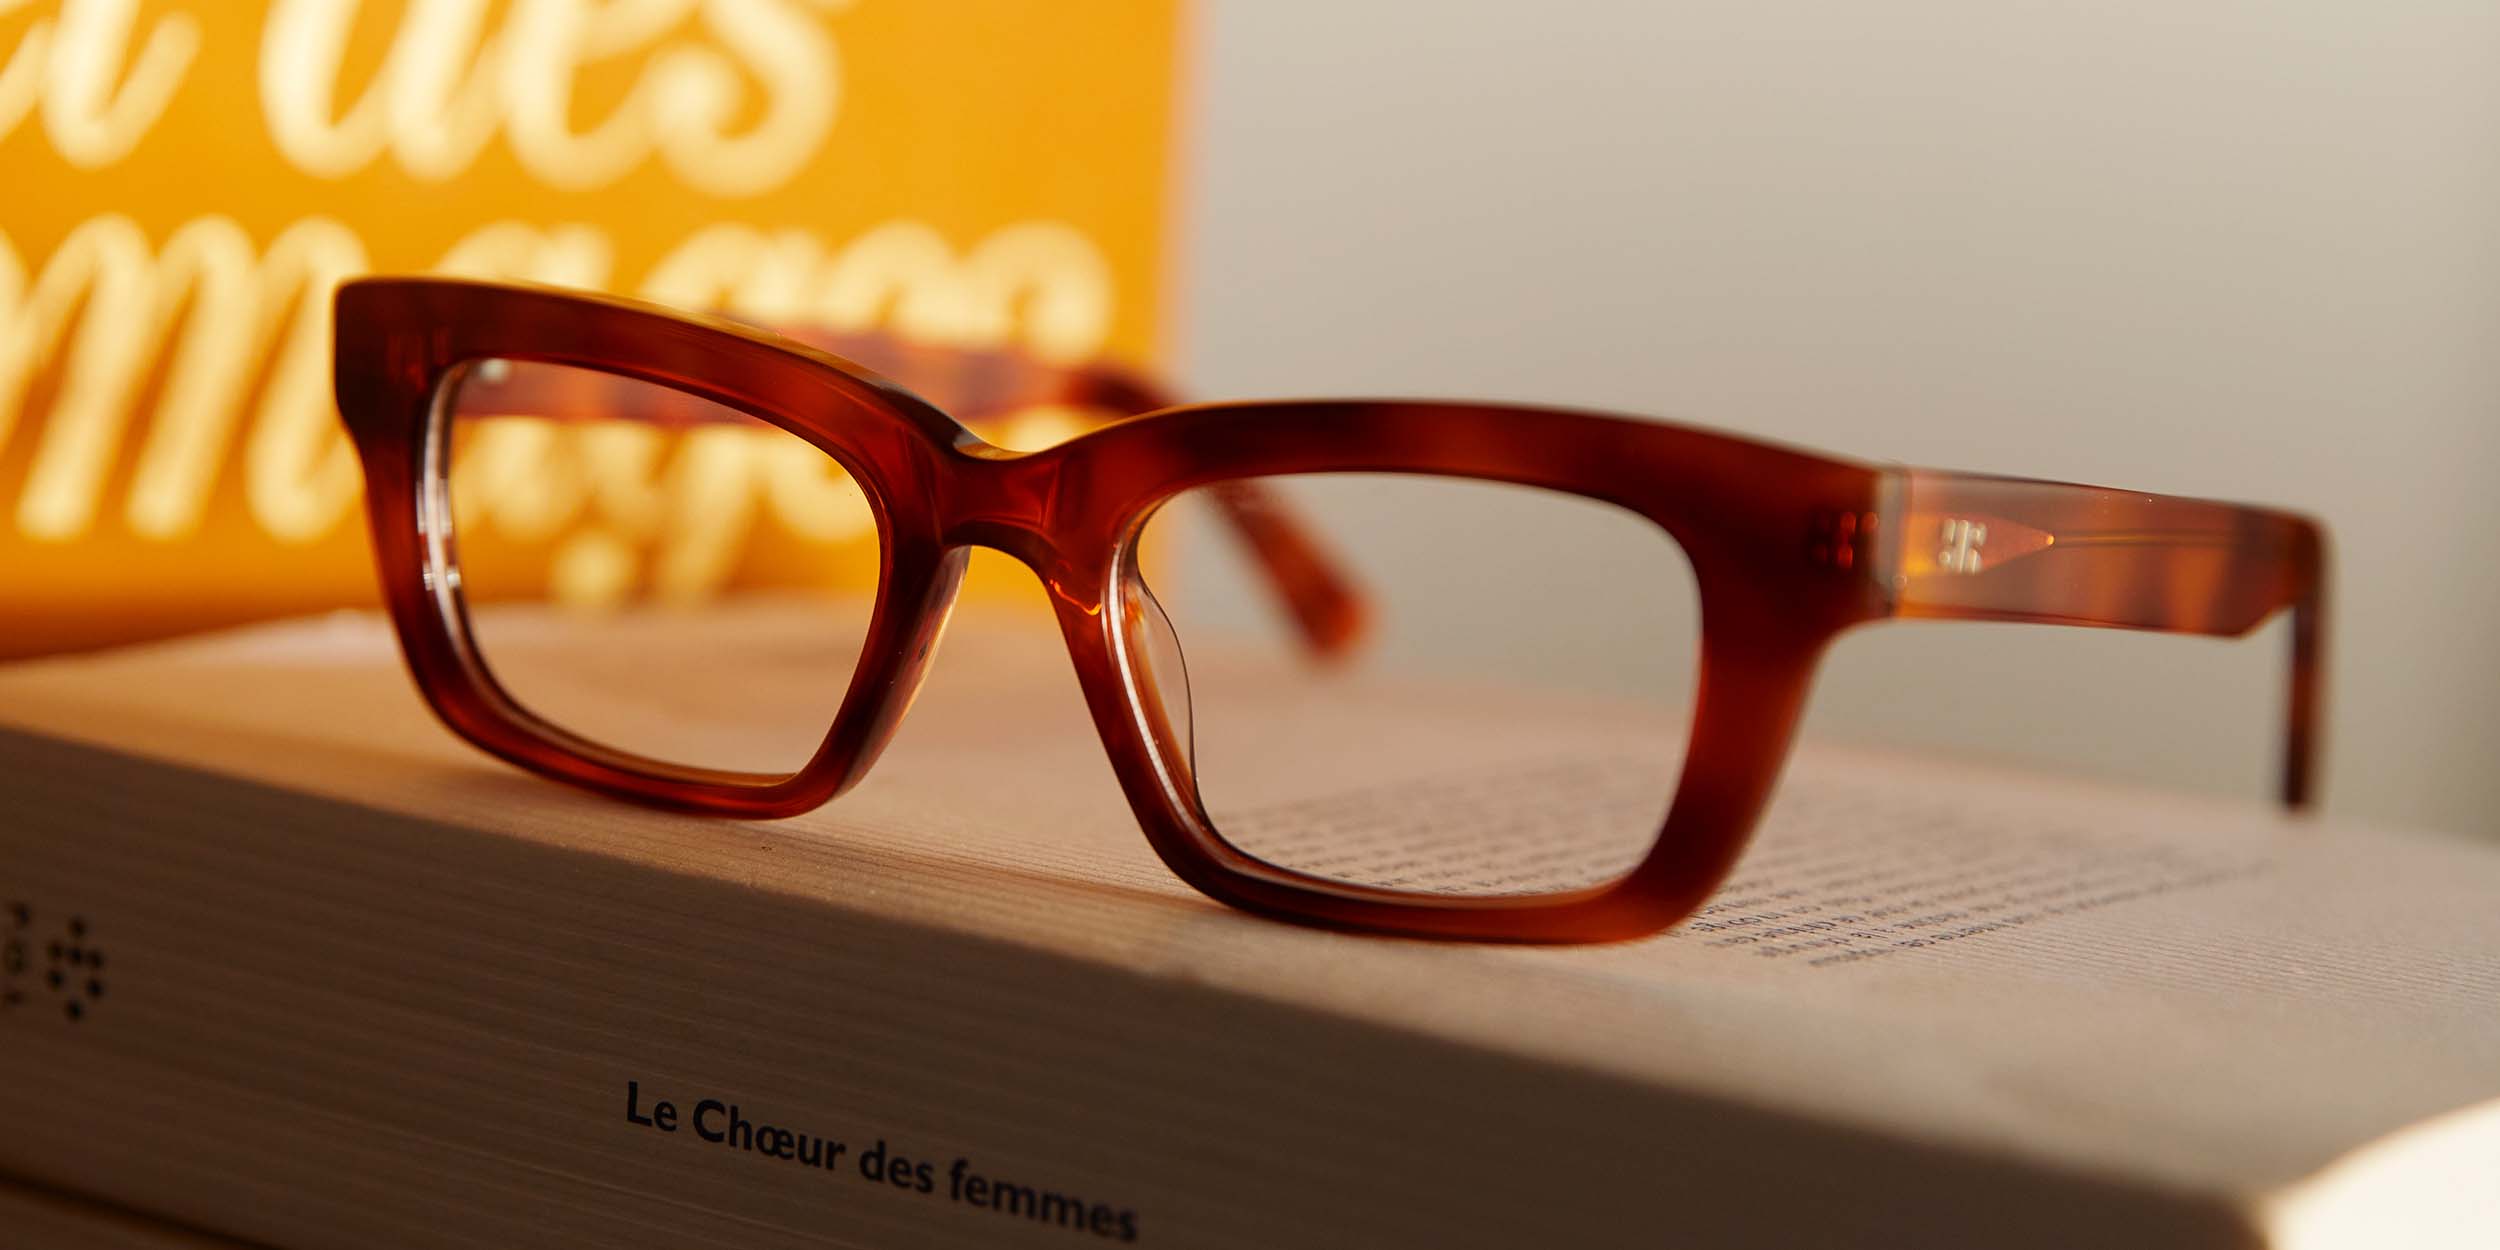 Photo Details of Margot Tortoise Reading Glasses in a room